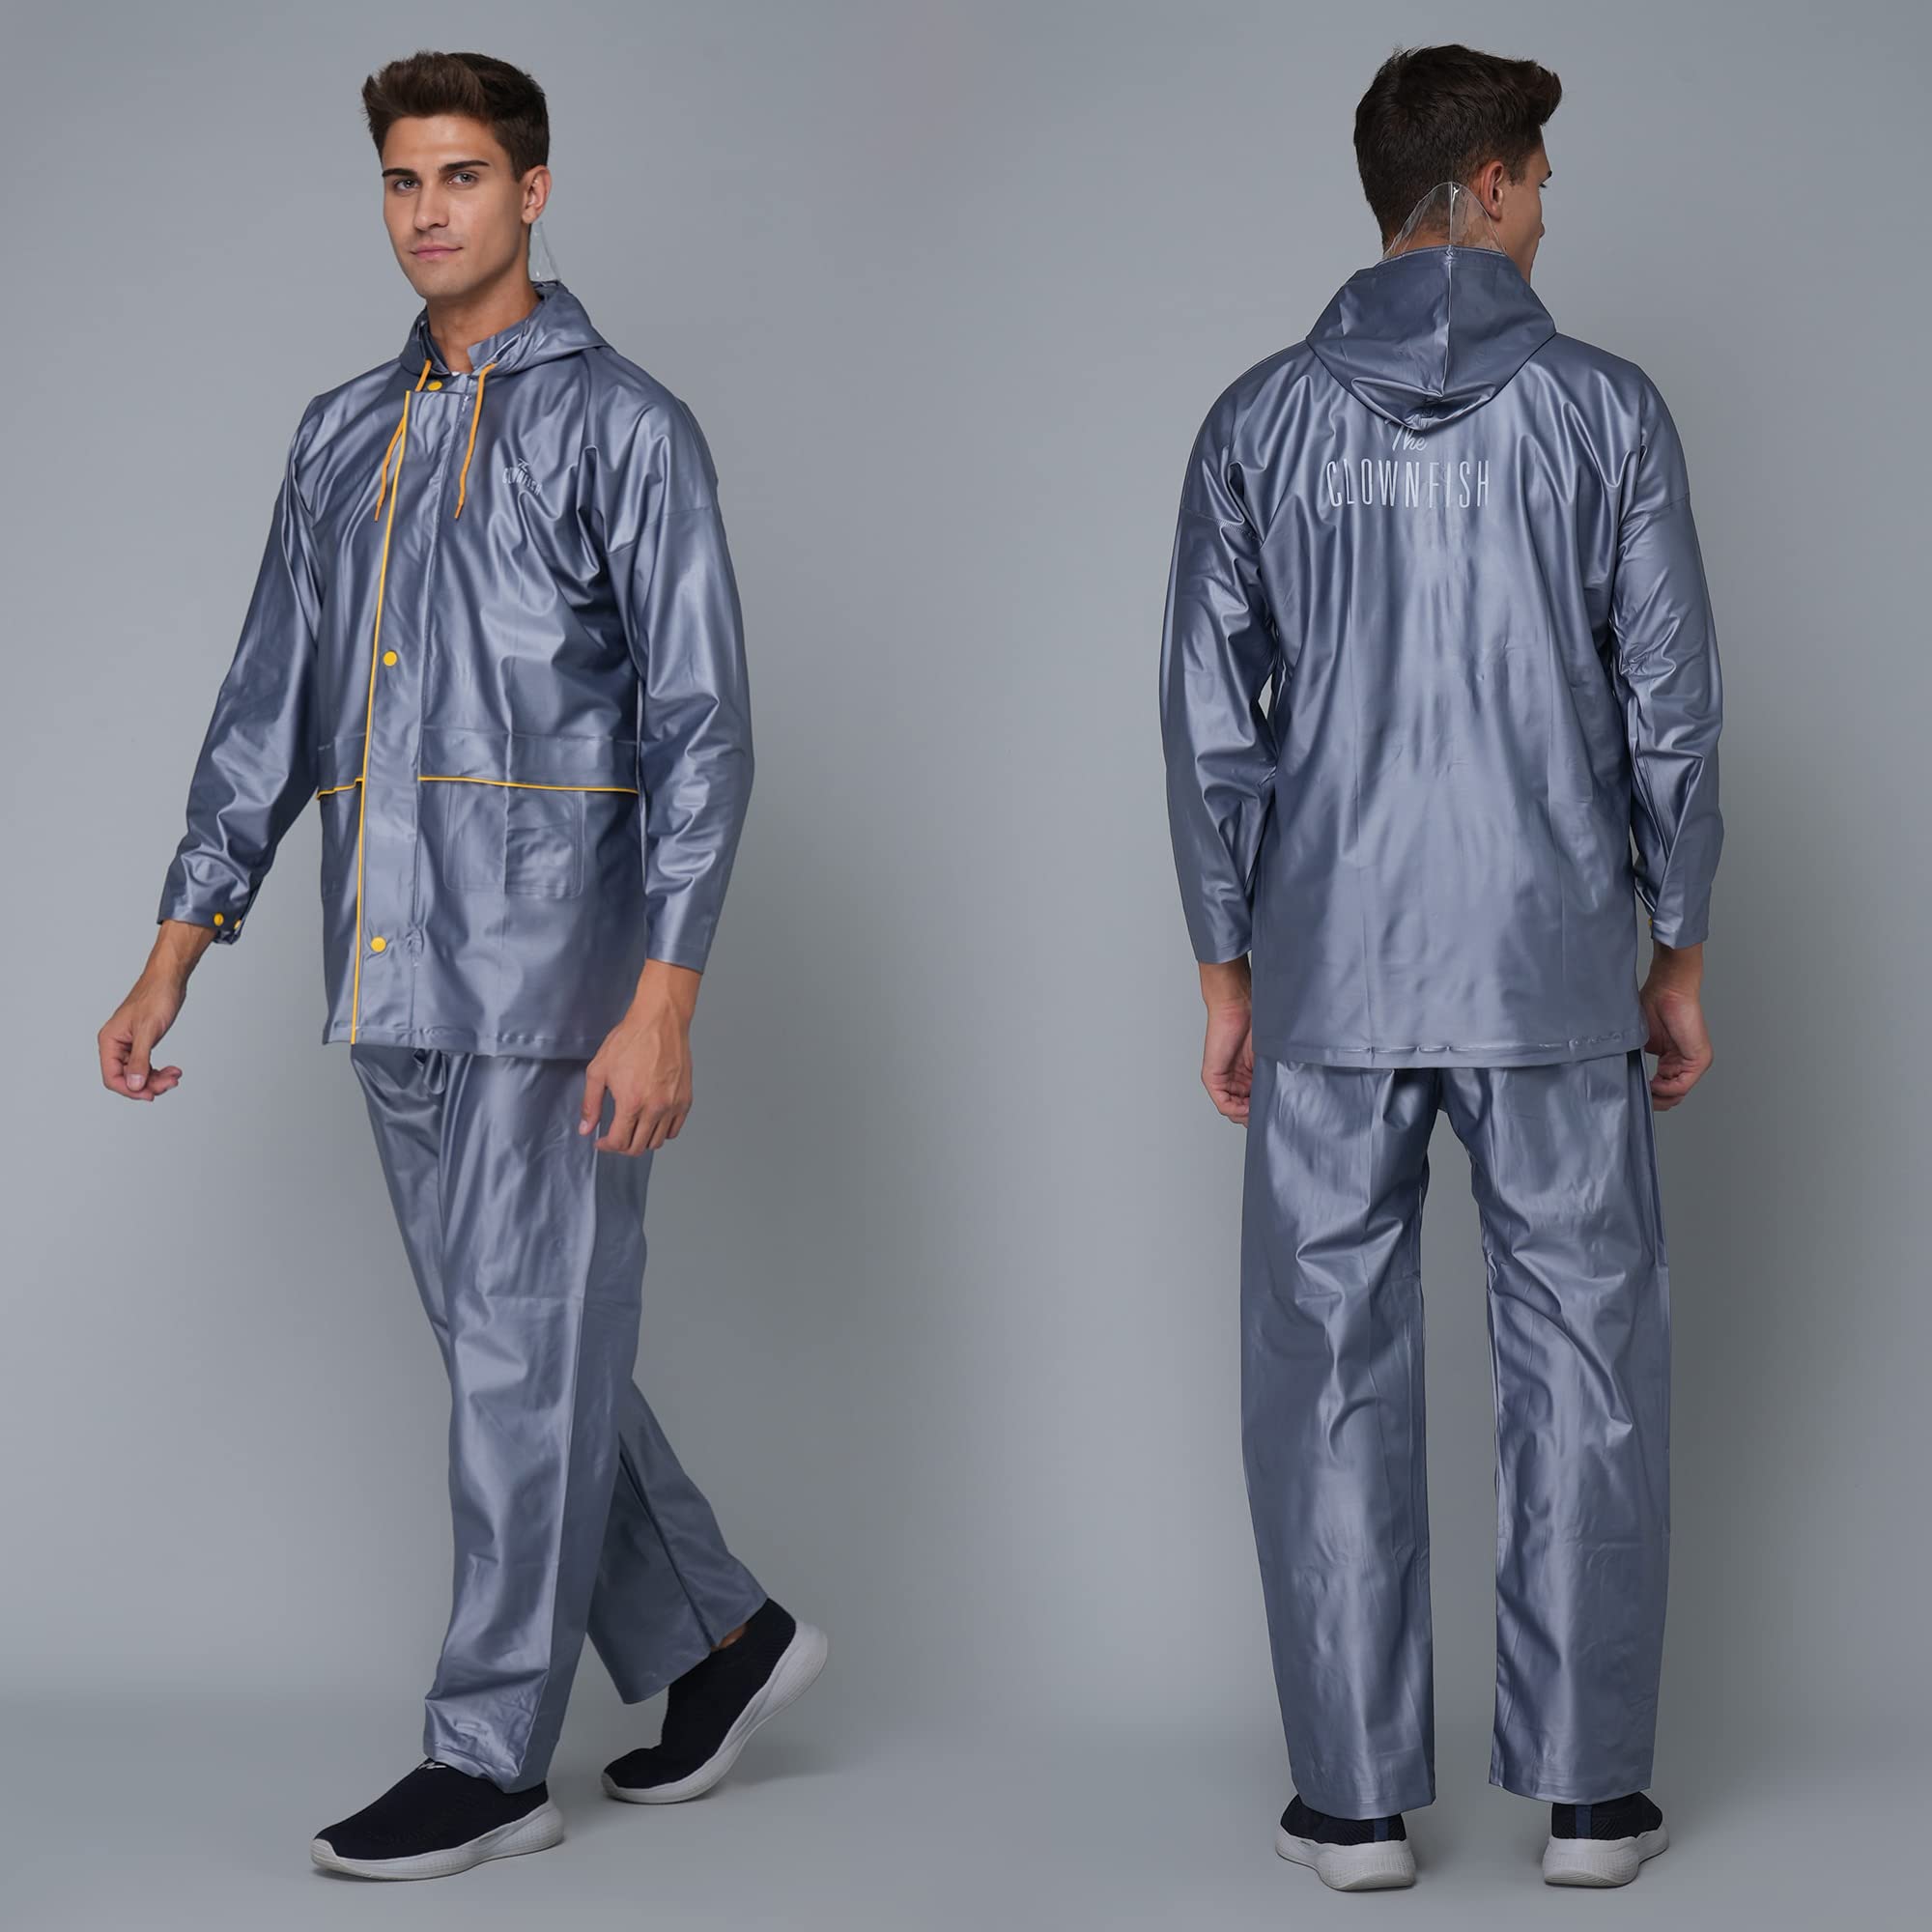 THE CLOWNFISH Rain Coat for Men Waterproof for Bike with Hood Raincoat for Men & Women. Samson Pro Series (Grey, X-Large)